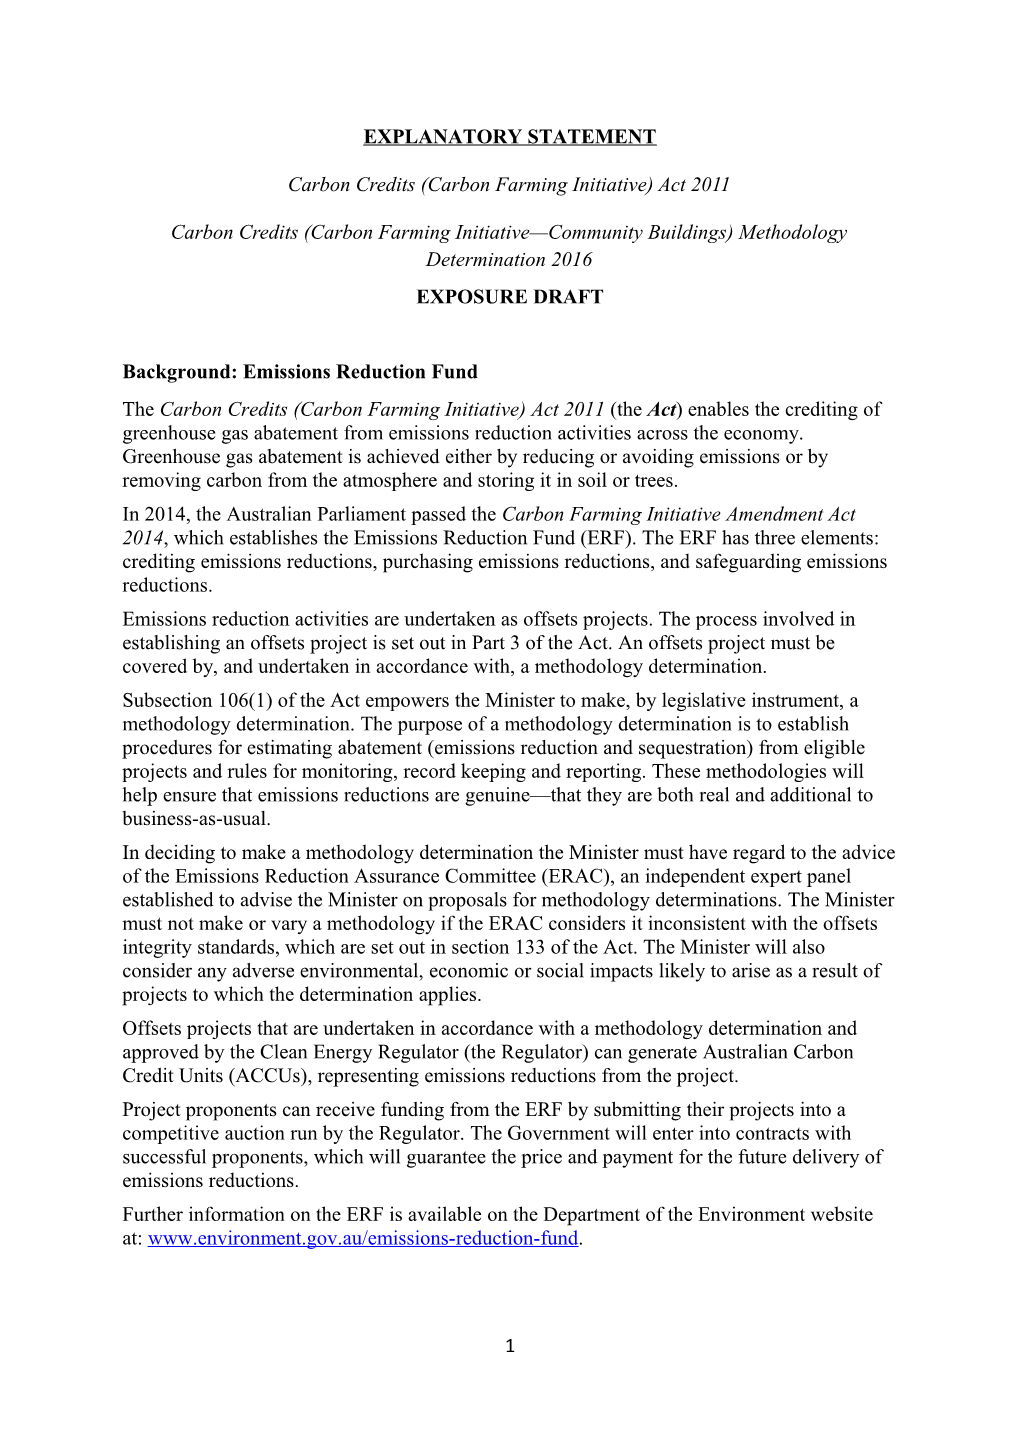 Explanatory Statement - Draft Carbon Credits (Carbon Farming Initiative Community Buildings)